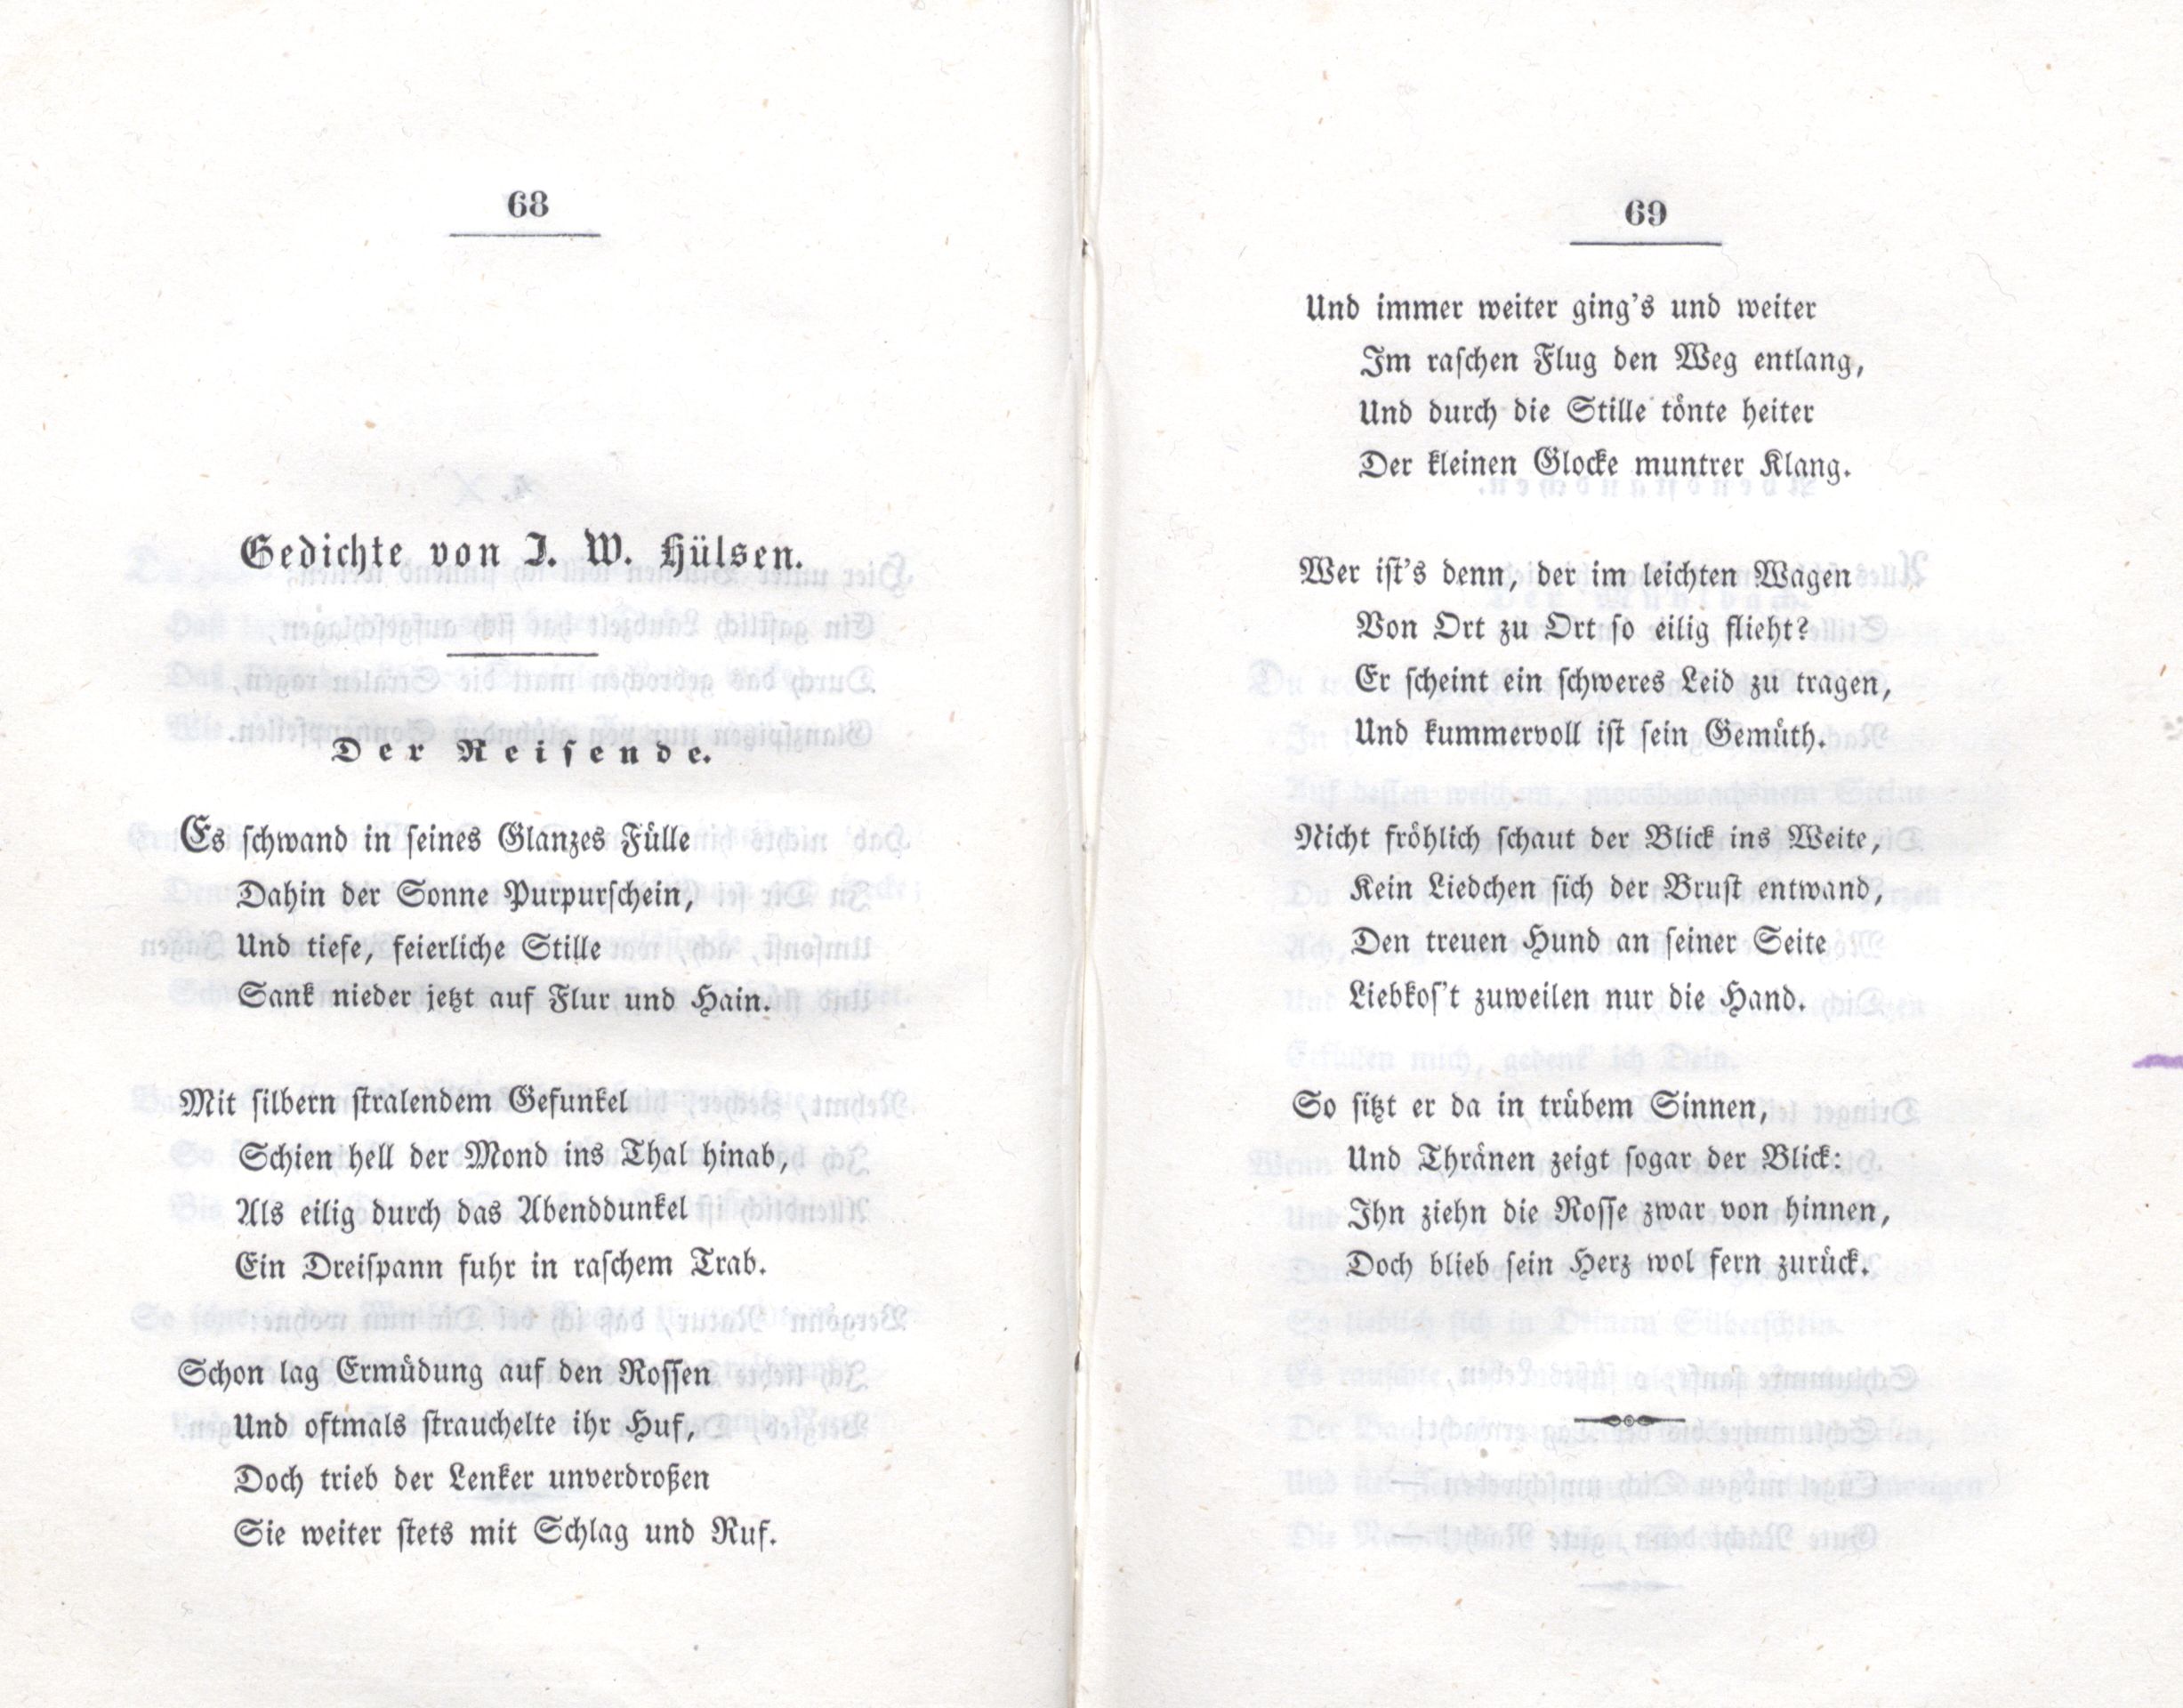 Der Reisende (1838) | 1. (68-69) Основной текст